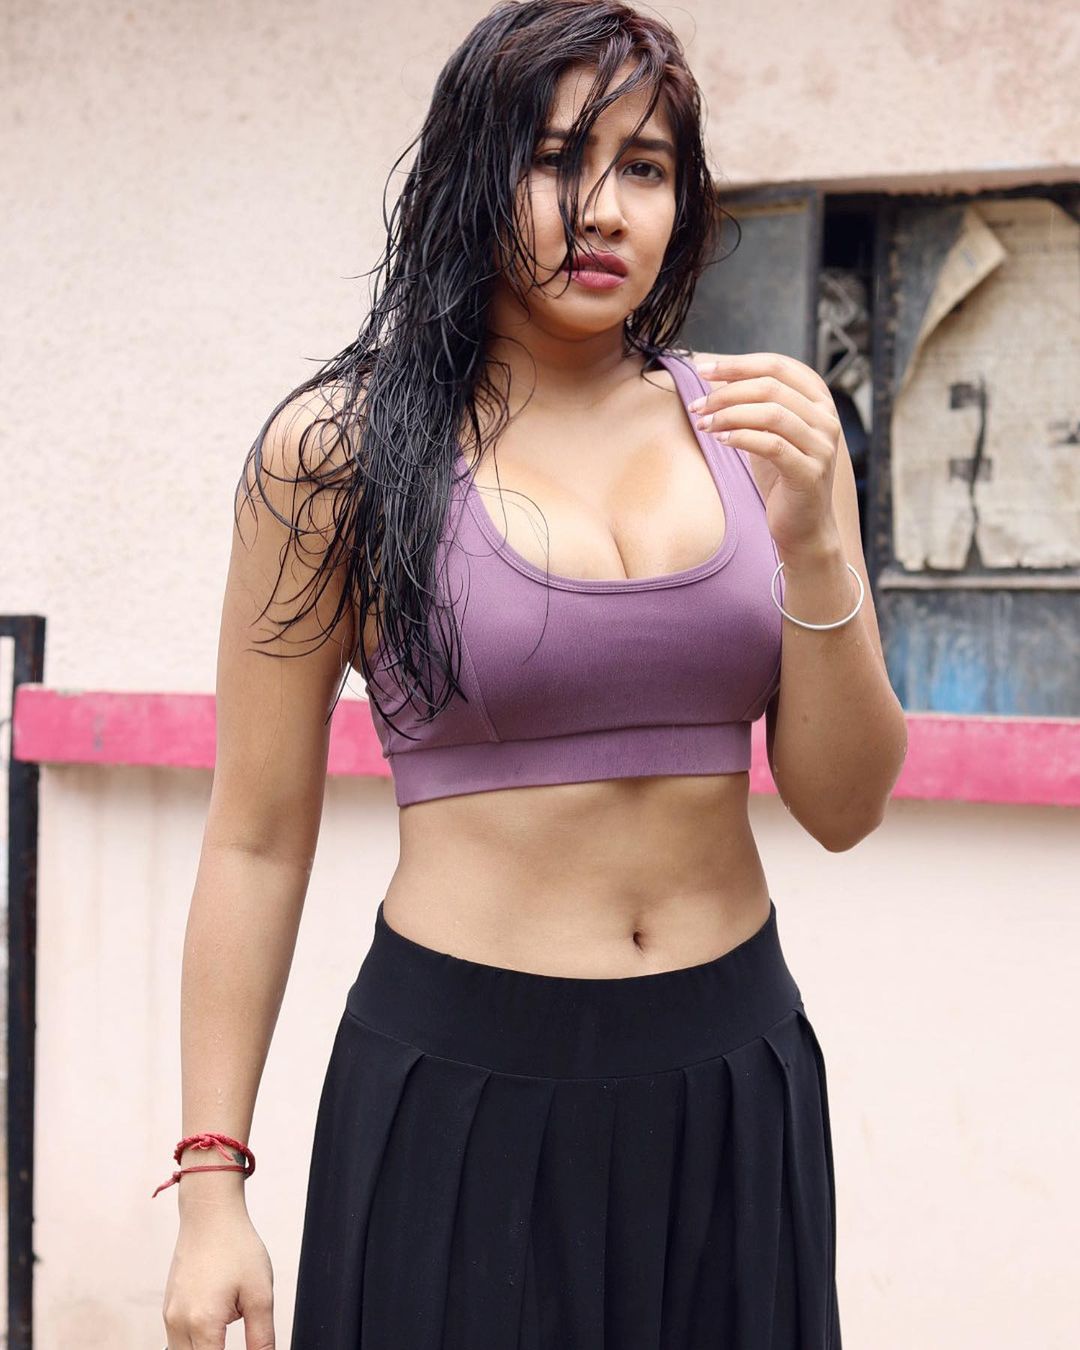 Sofia Ansari Height, Weight, and Fitness